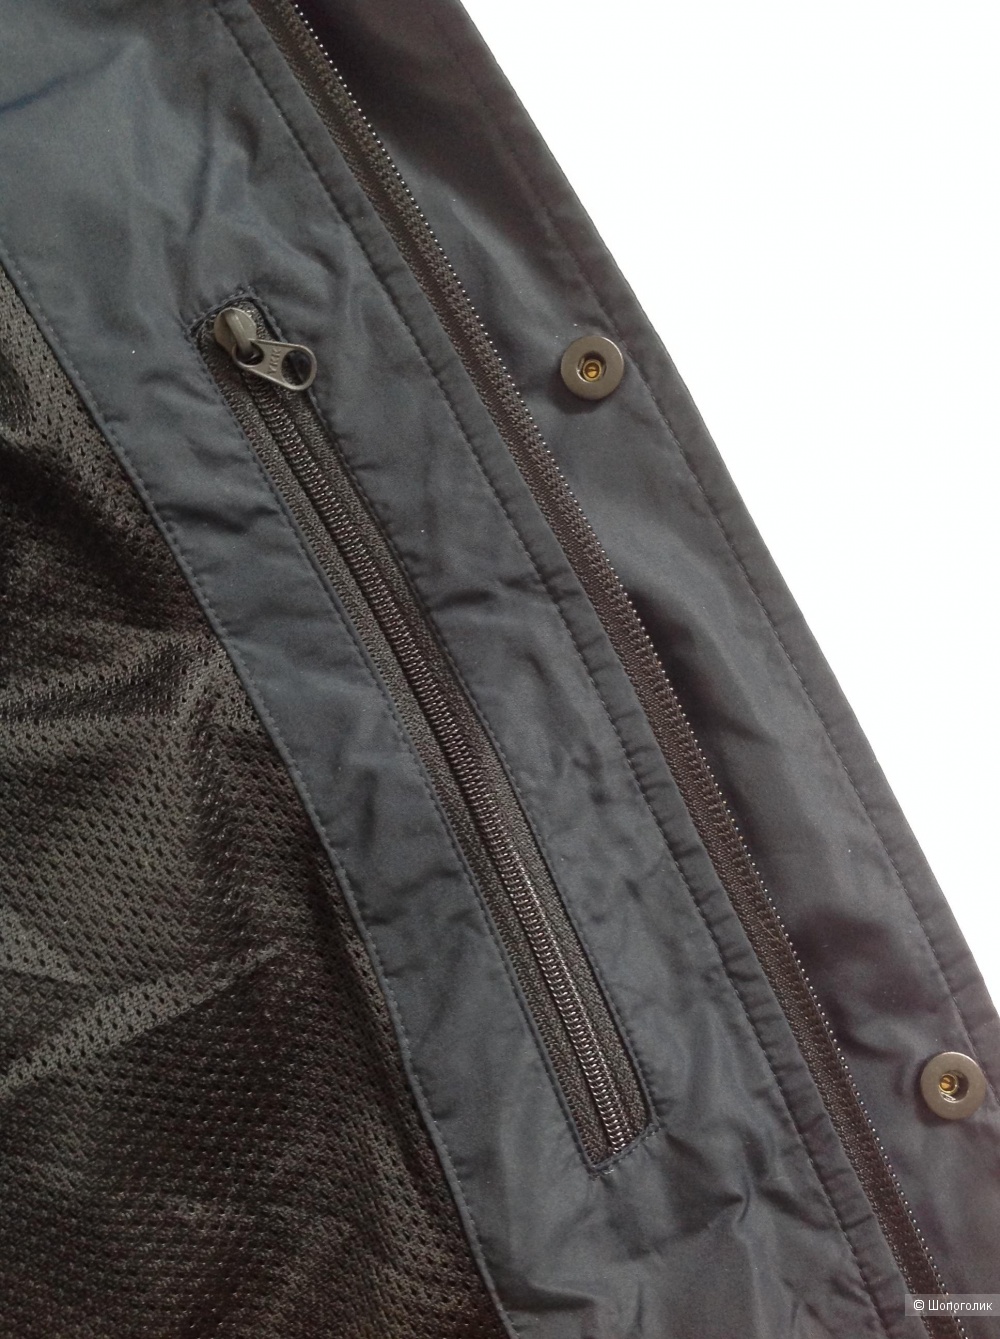 Лёгкая куртка GEOX, размер 52 IT